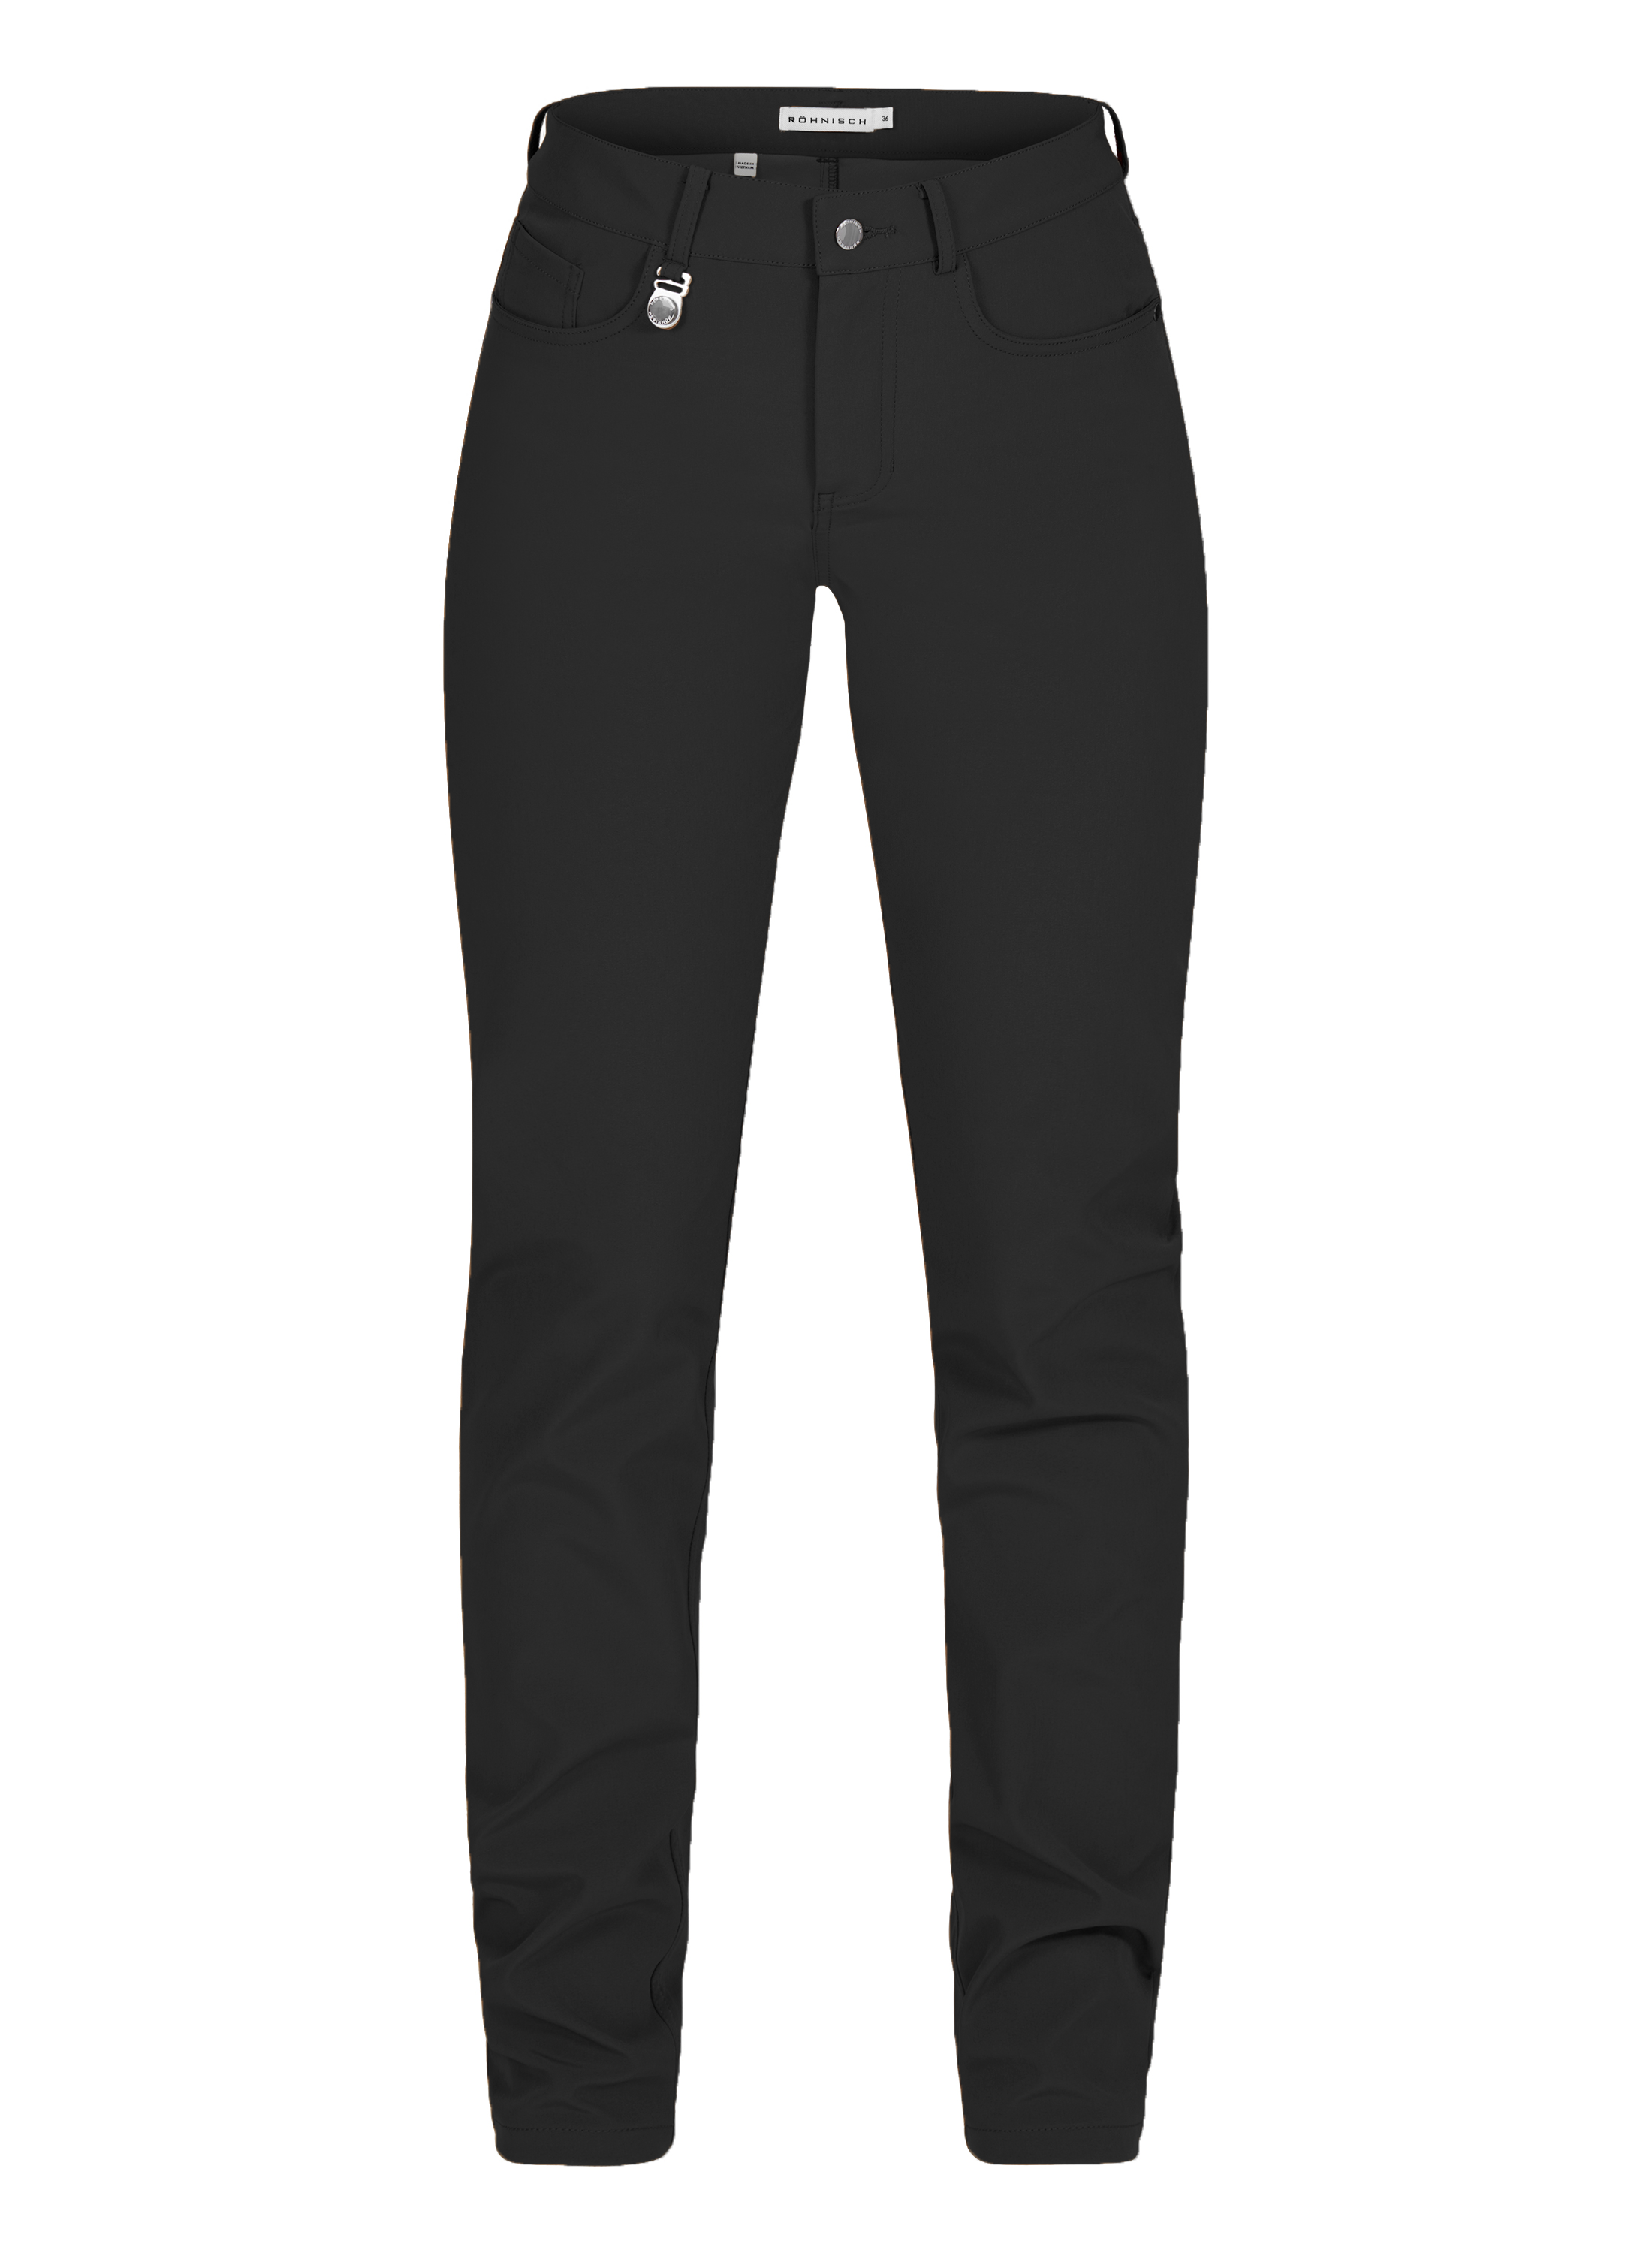 Rohnisch | 110740 | Insulate pants 32 |  0001 Black